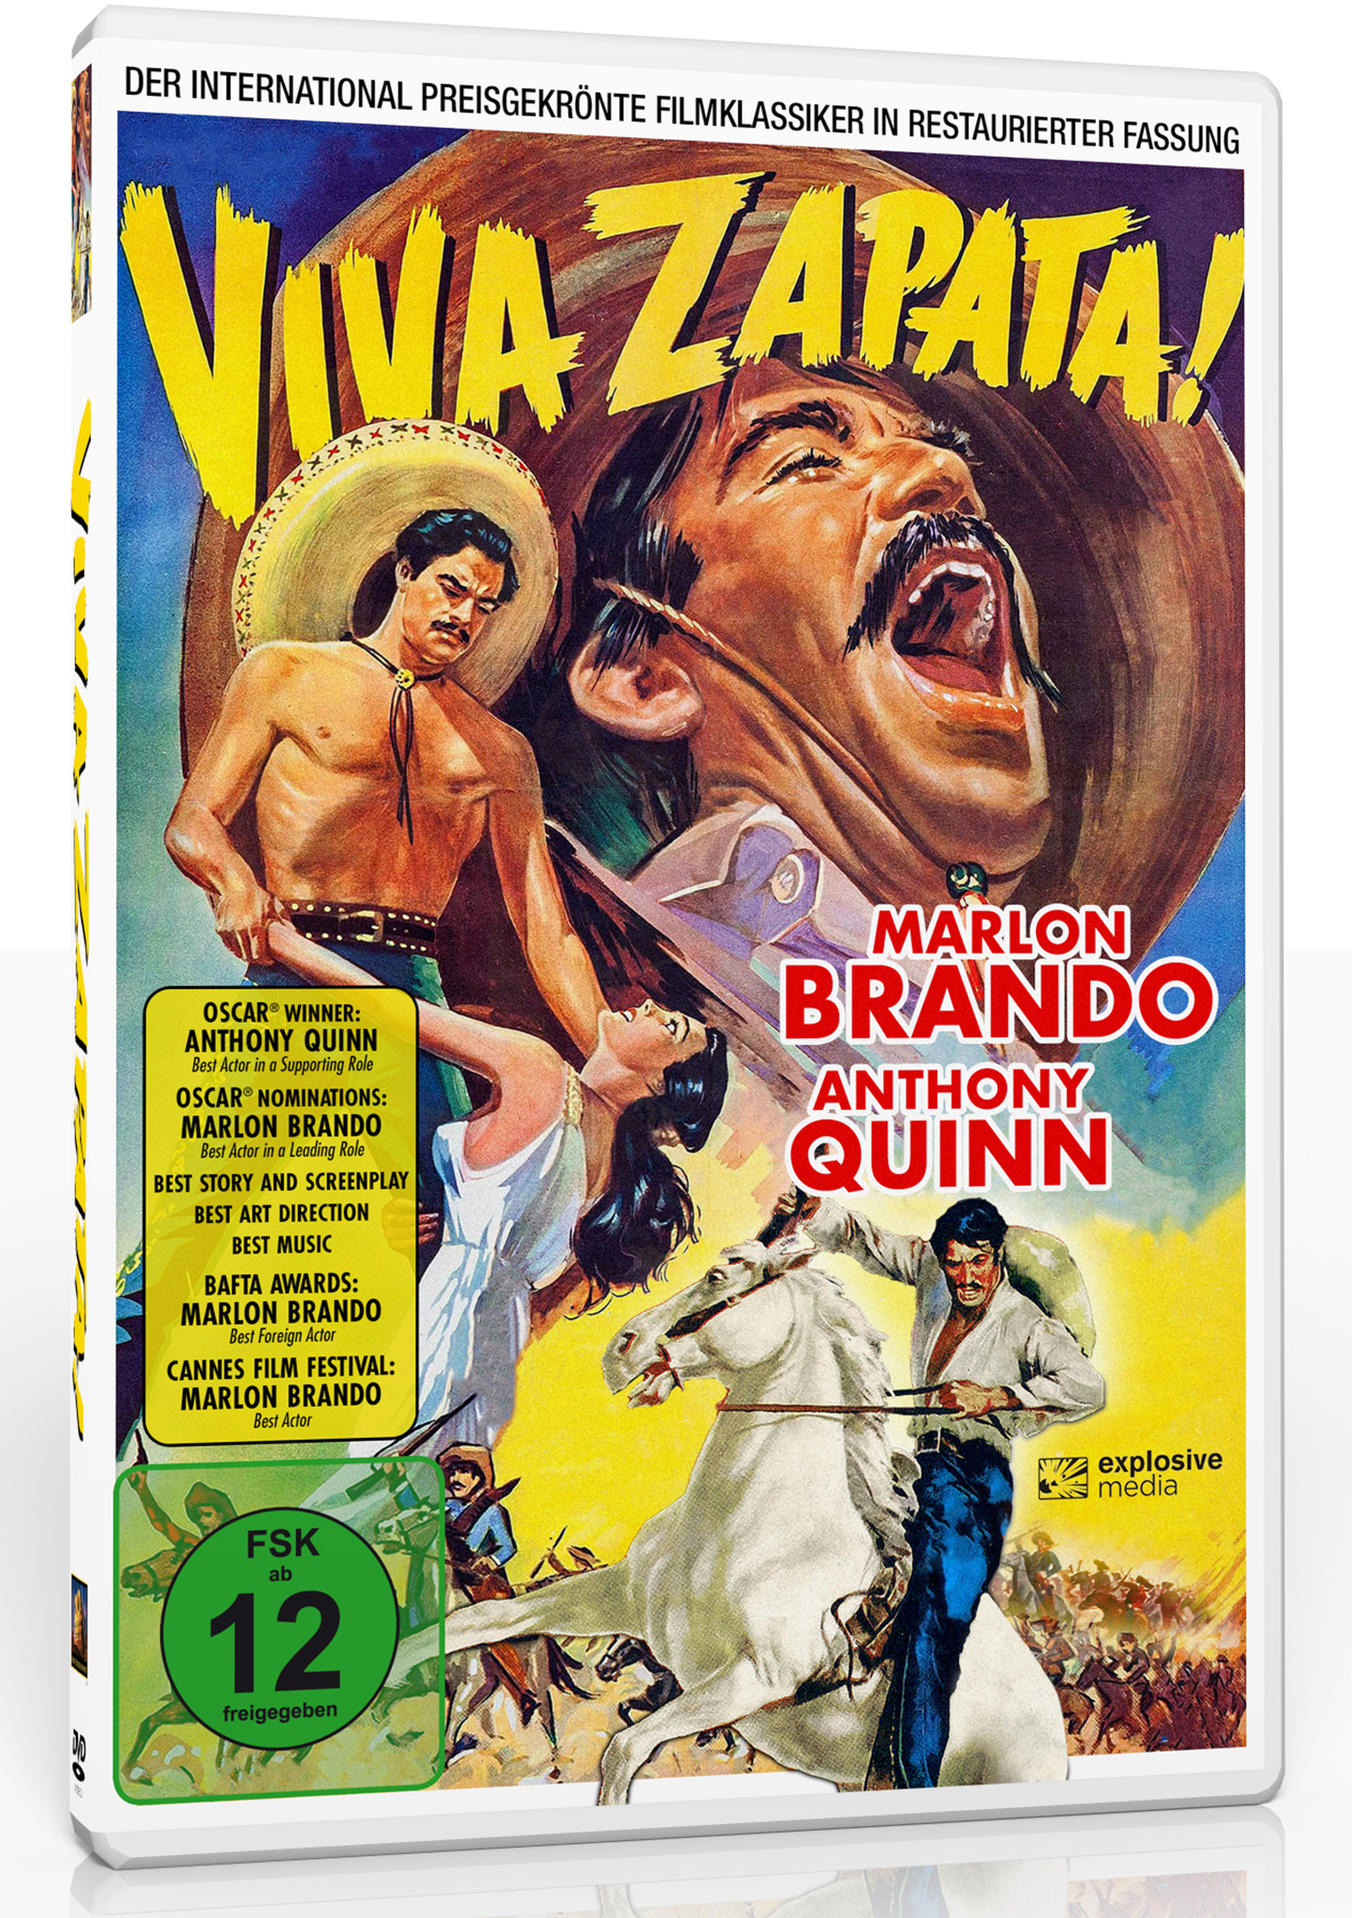 DVD Zapata! Viva